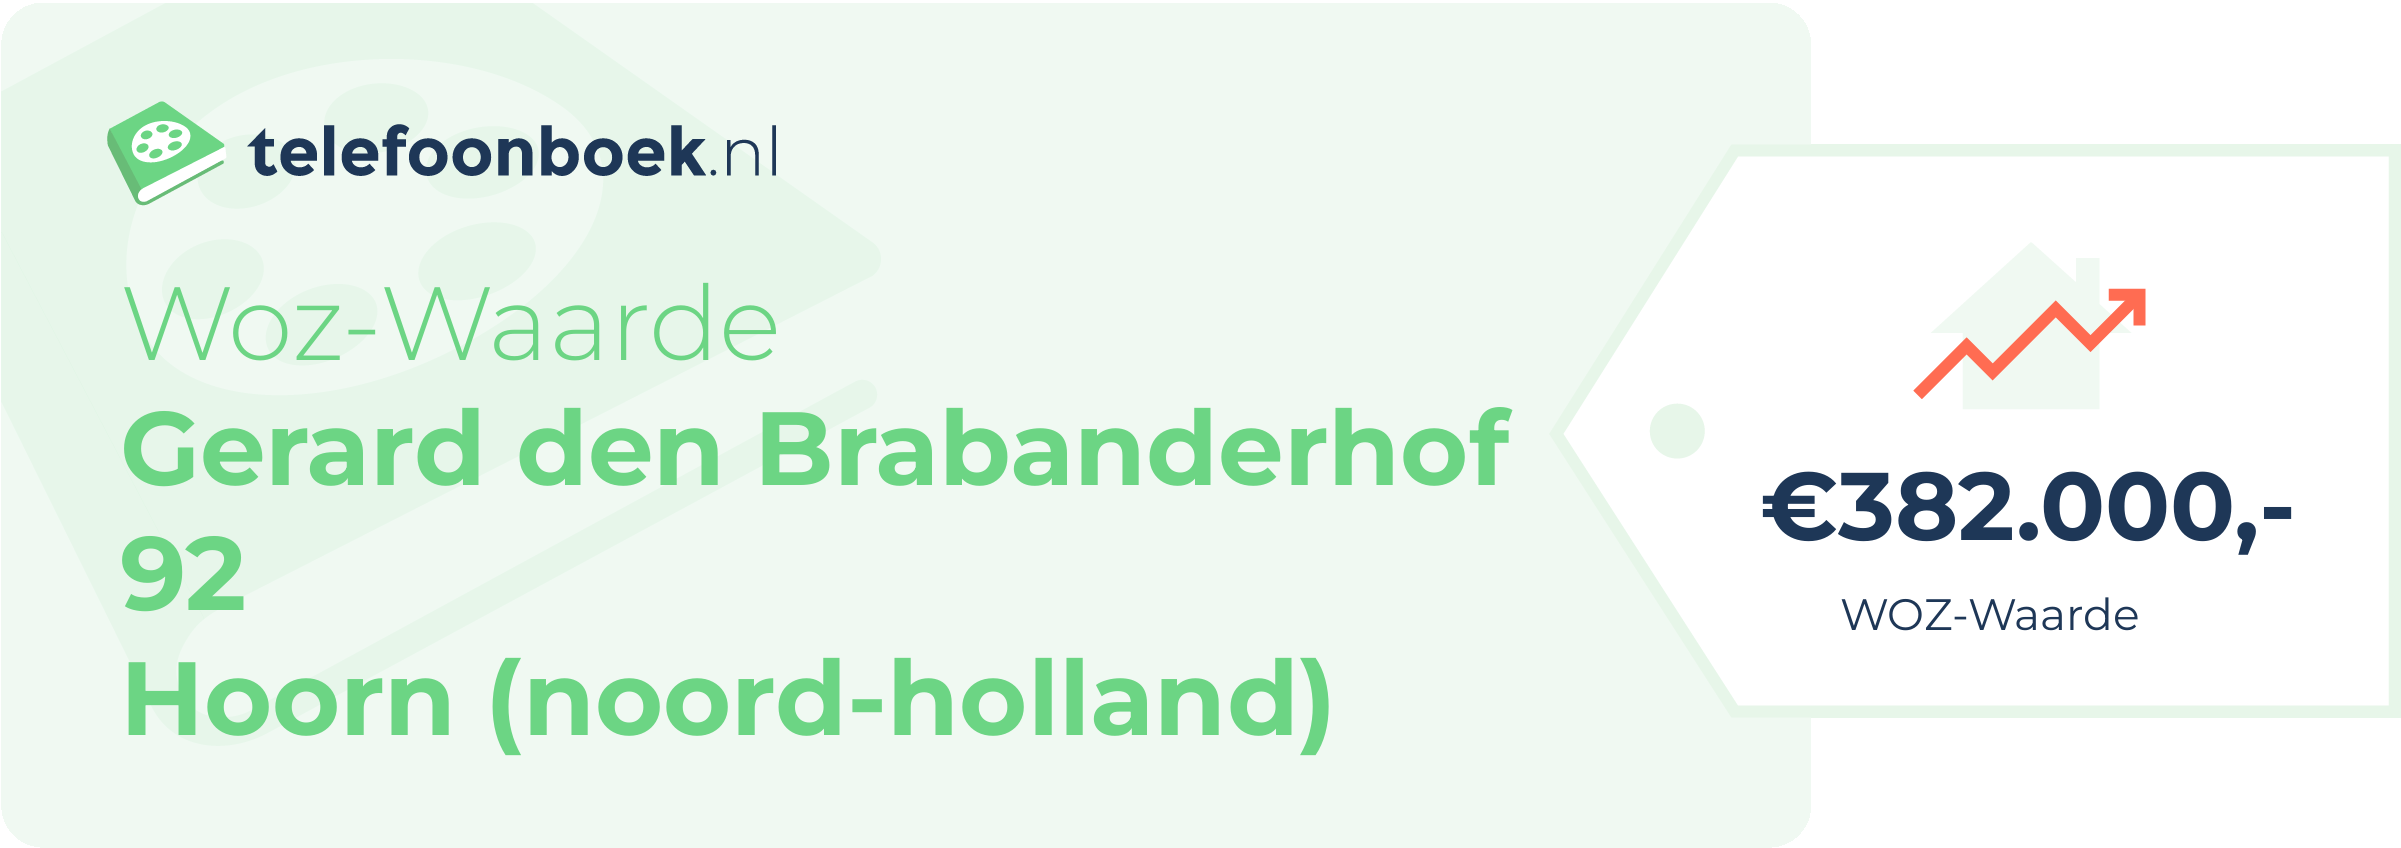 WOZ-waarde Gerard Den Brabanderhof 92 Hoorn (Noord-Holland)